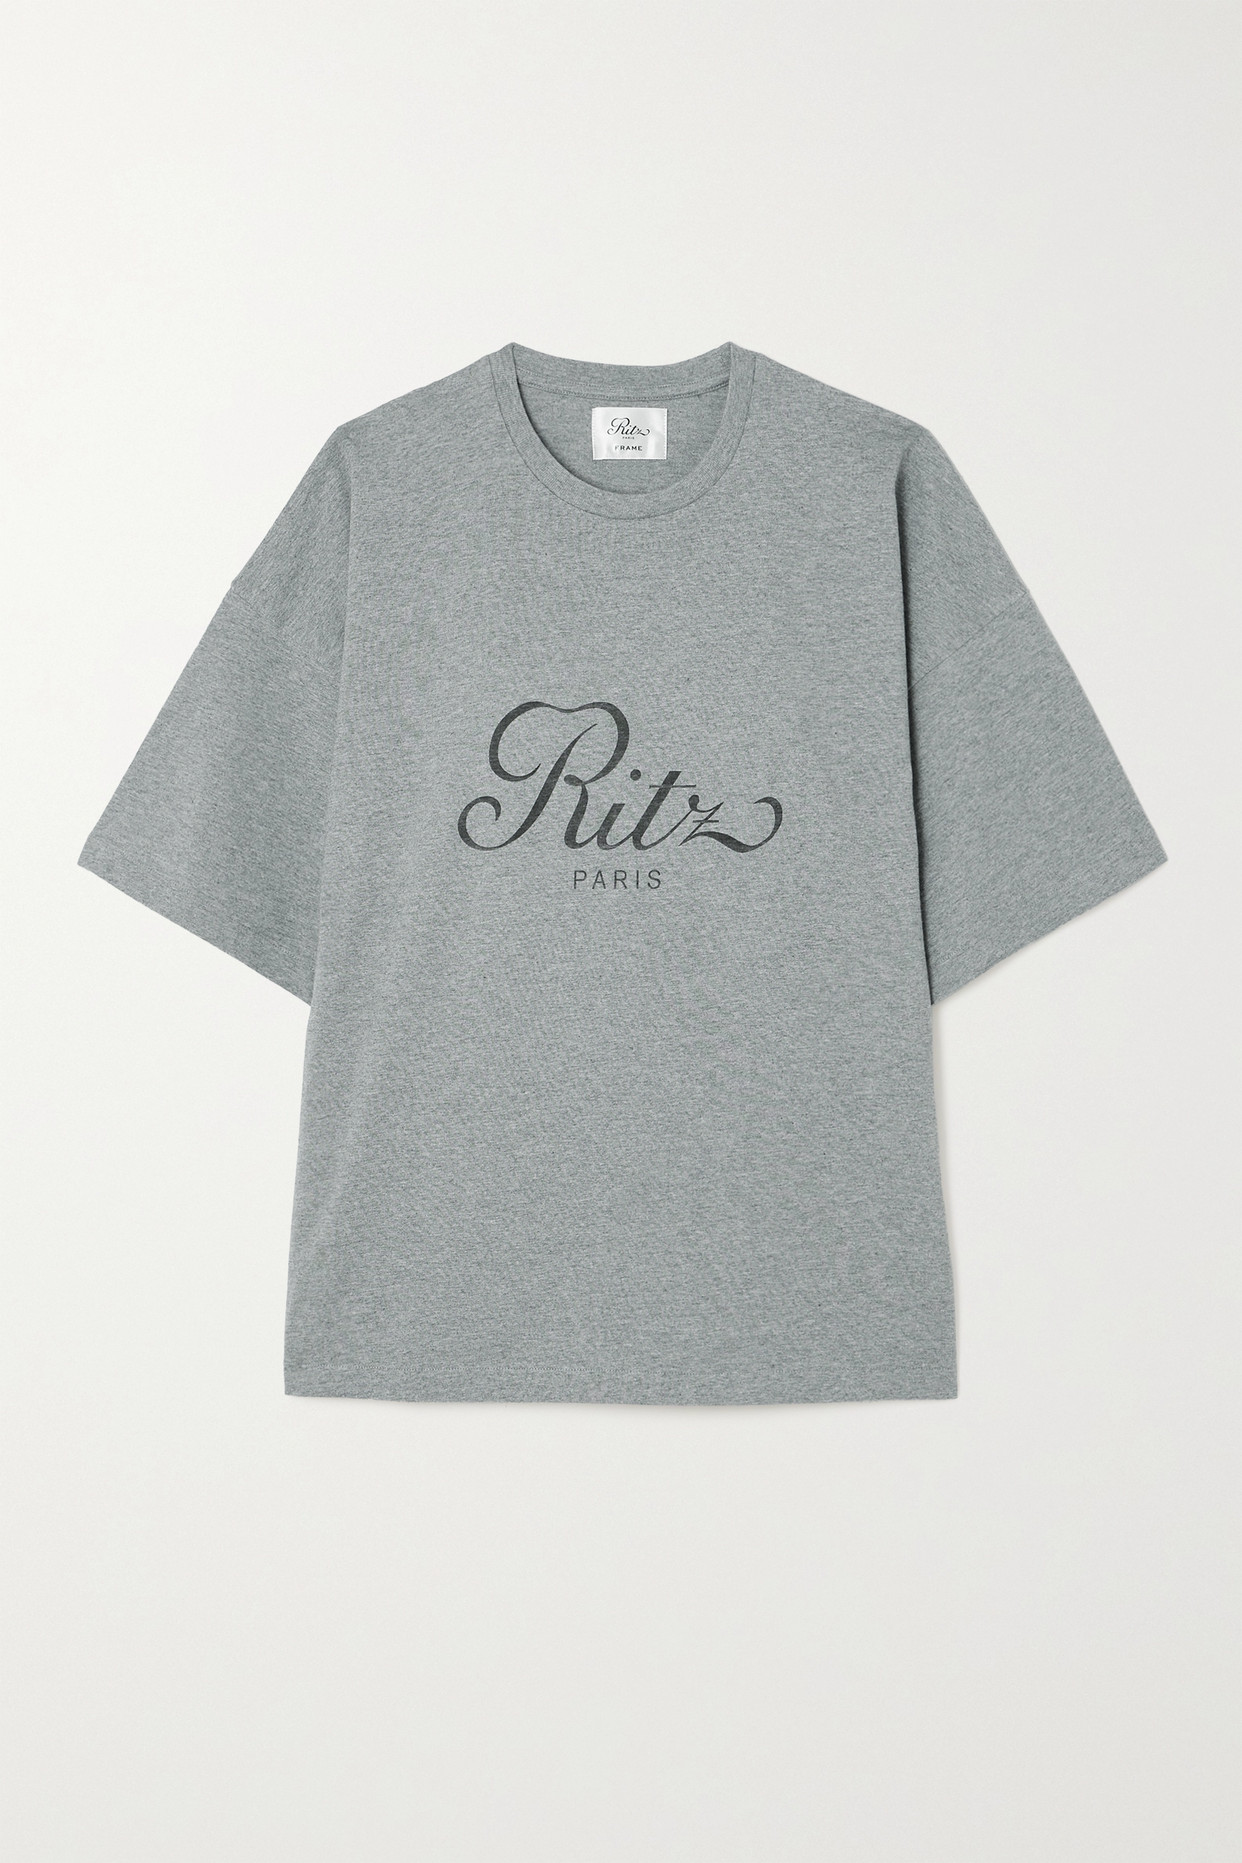 + Ritz Paris Oversized Printed Cotton-Jersey T-Shirt